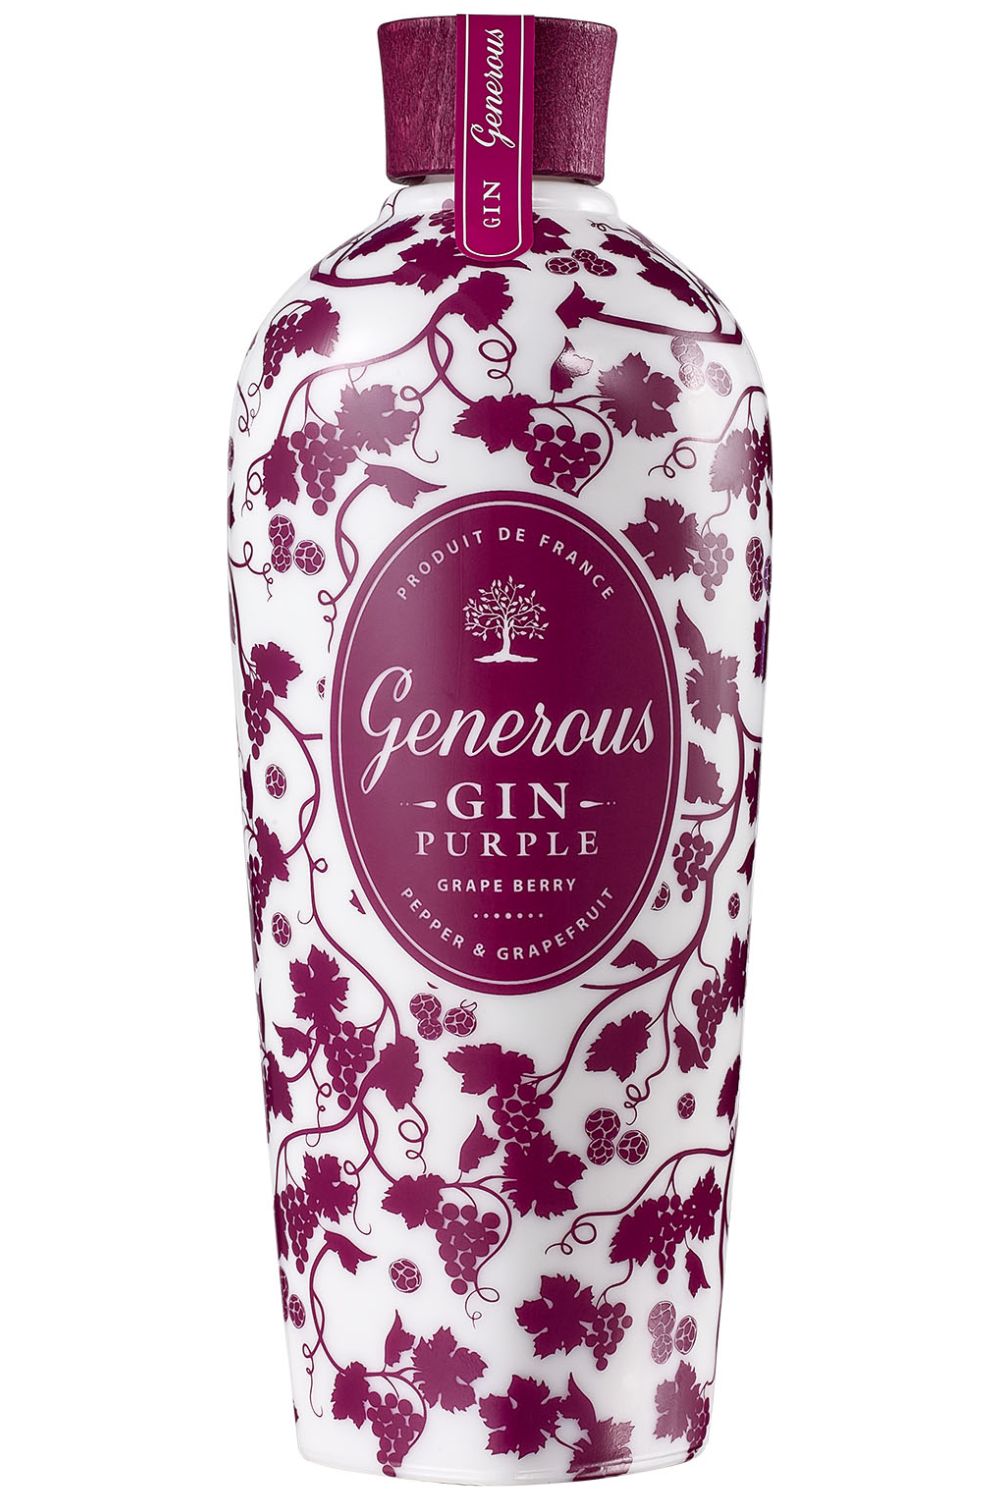 Generous Purple Gin